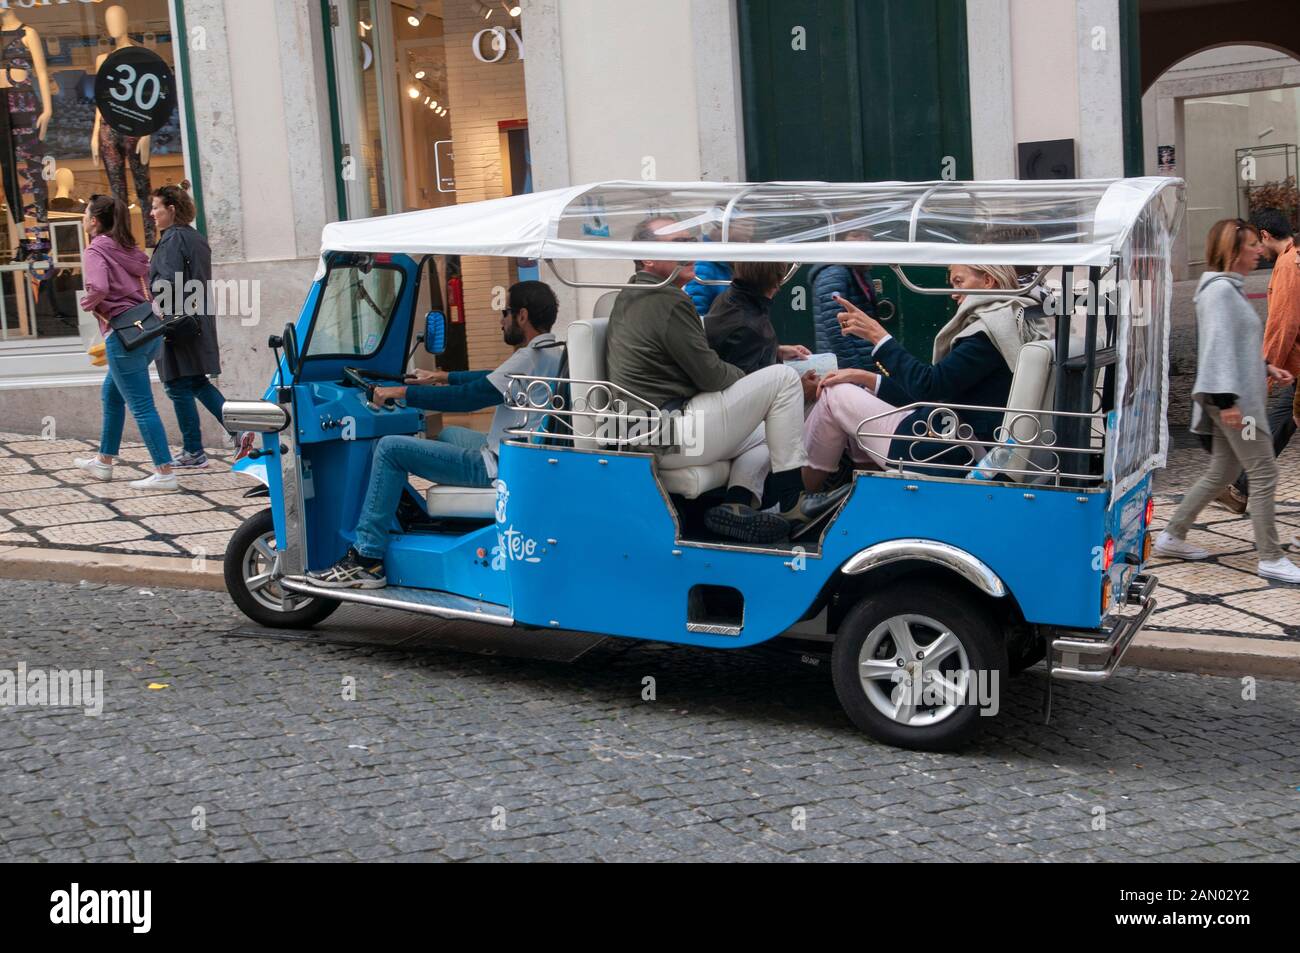 Tuktuk-Fahrer, die Touristen Besichtigungstouren in Lissabon, Portugal, anbieten Stockfoto